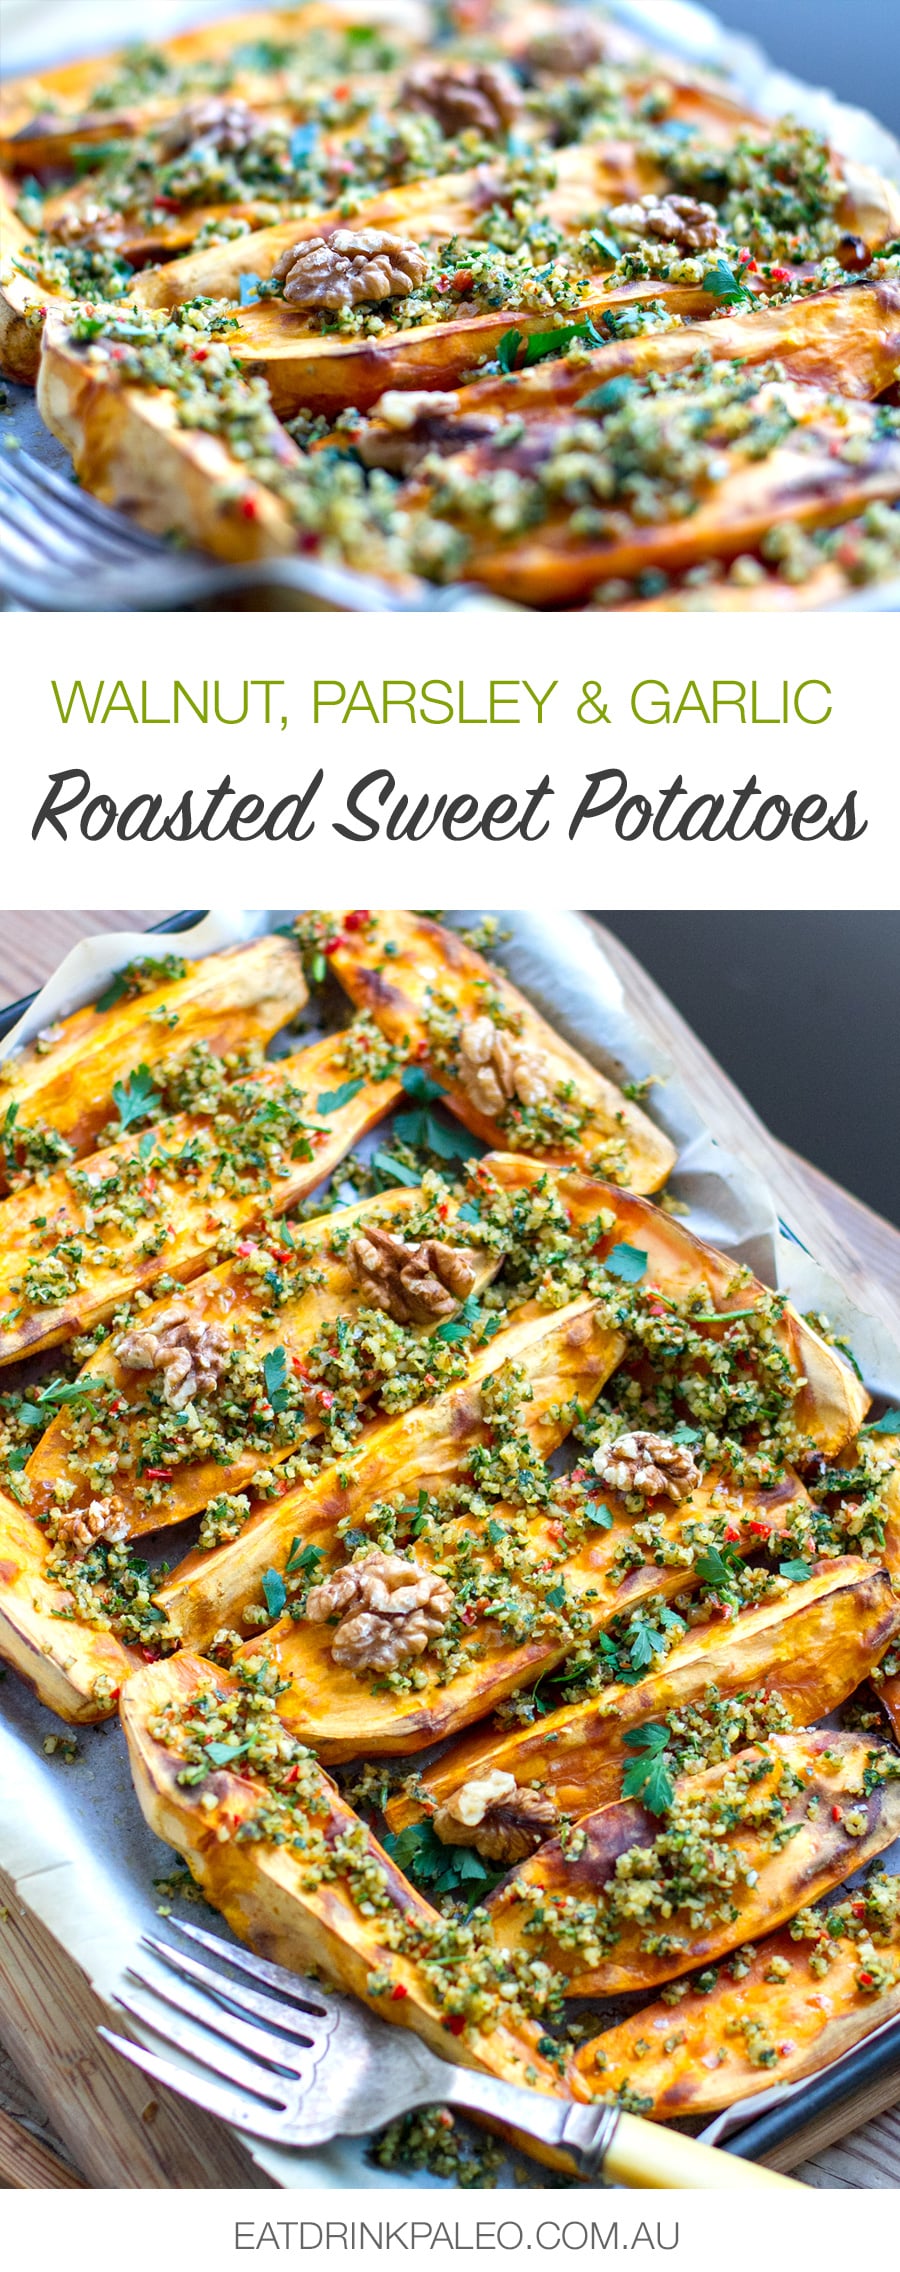 Walnuts, Parsley & Garlic Roasted Sweet Potatoes